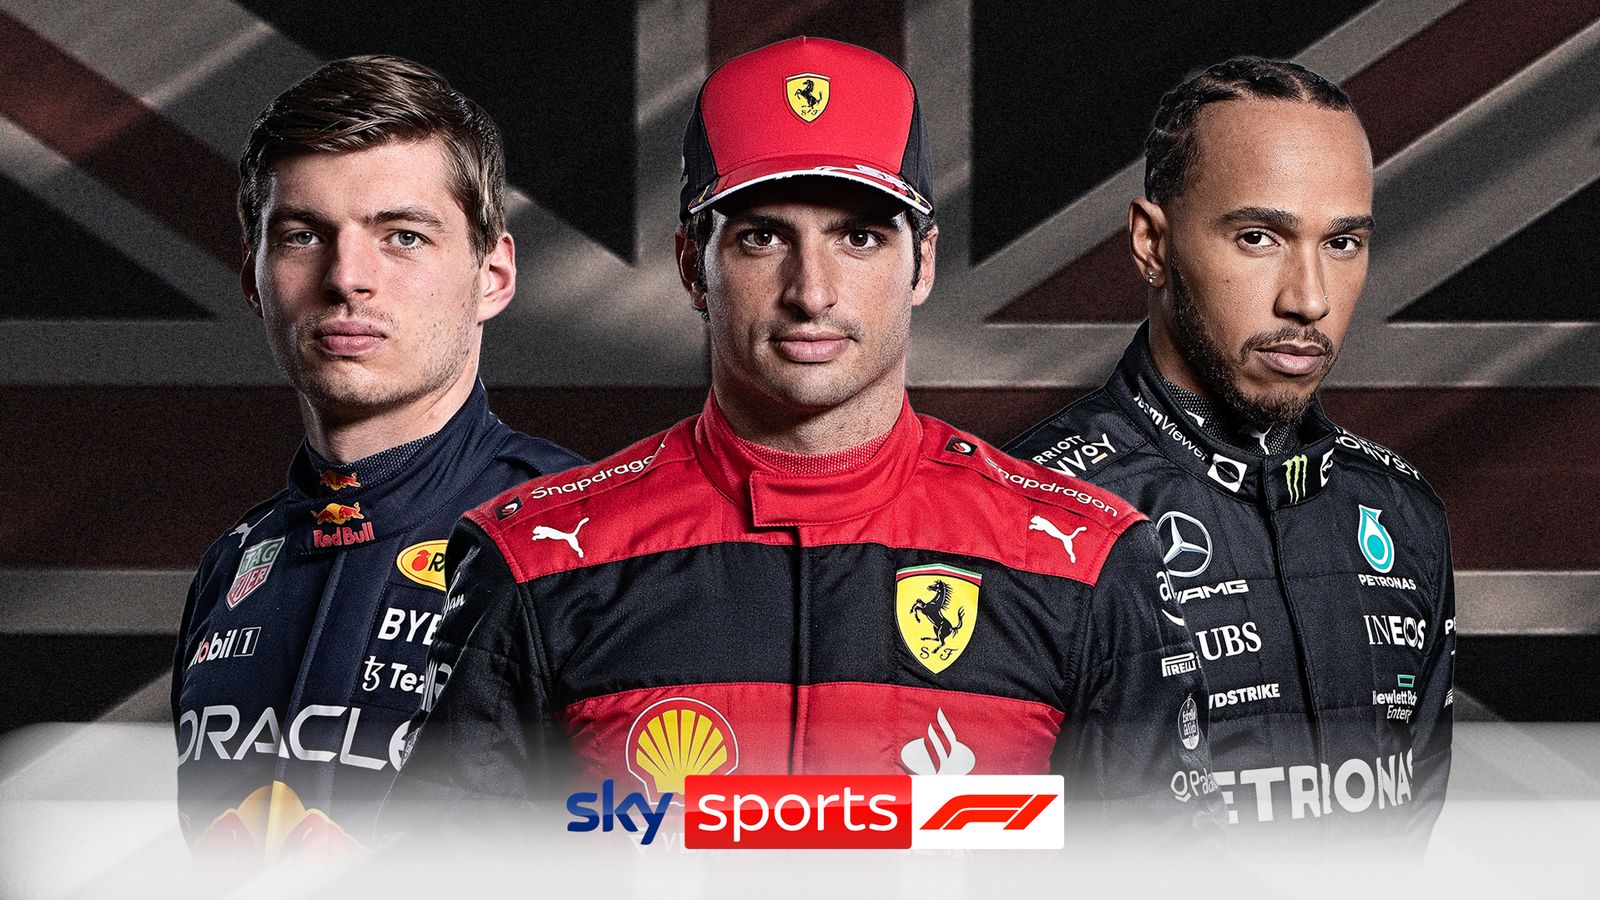 British Grand Prix: Live race updates as Carlos Sainz starts on pole ahead of Max Verstappen at Silverstone